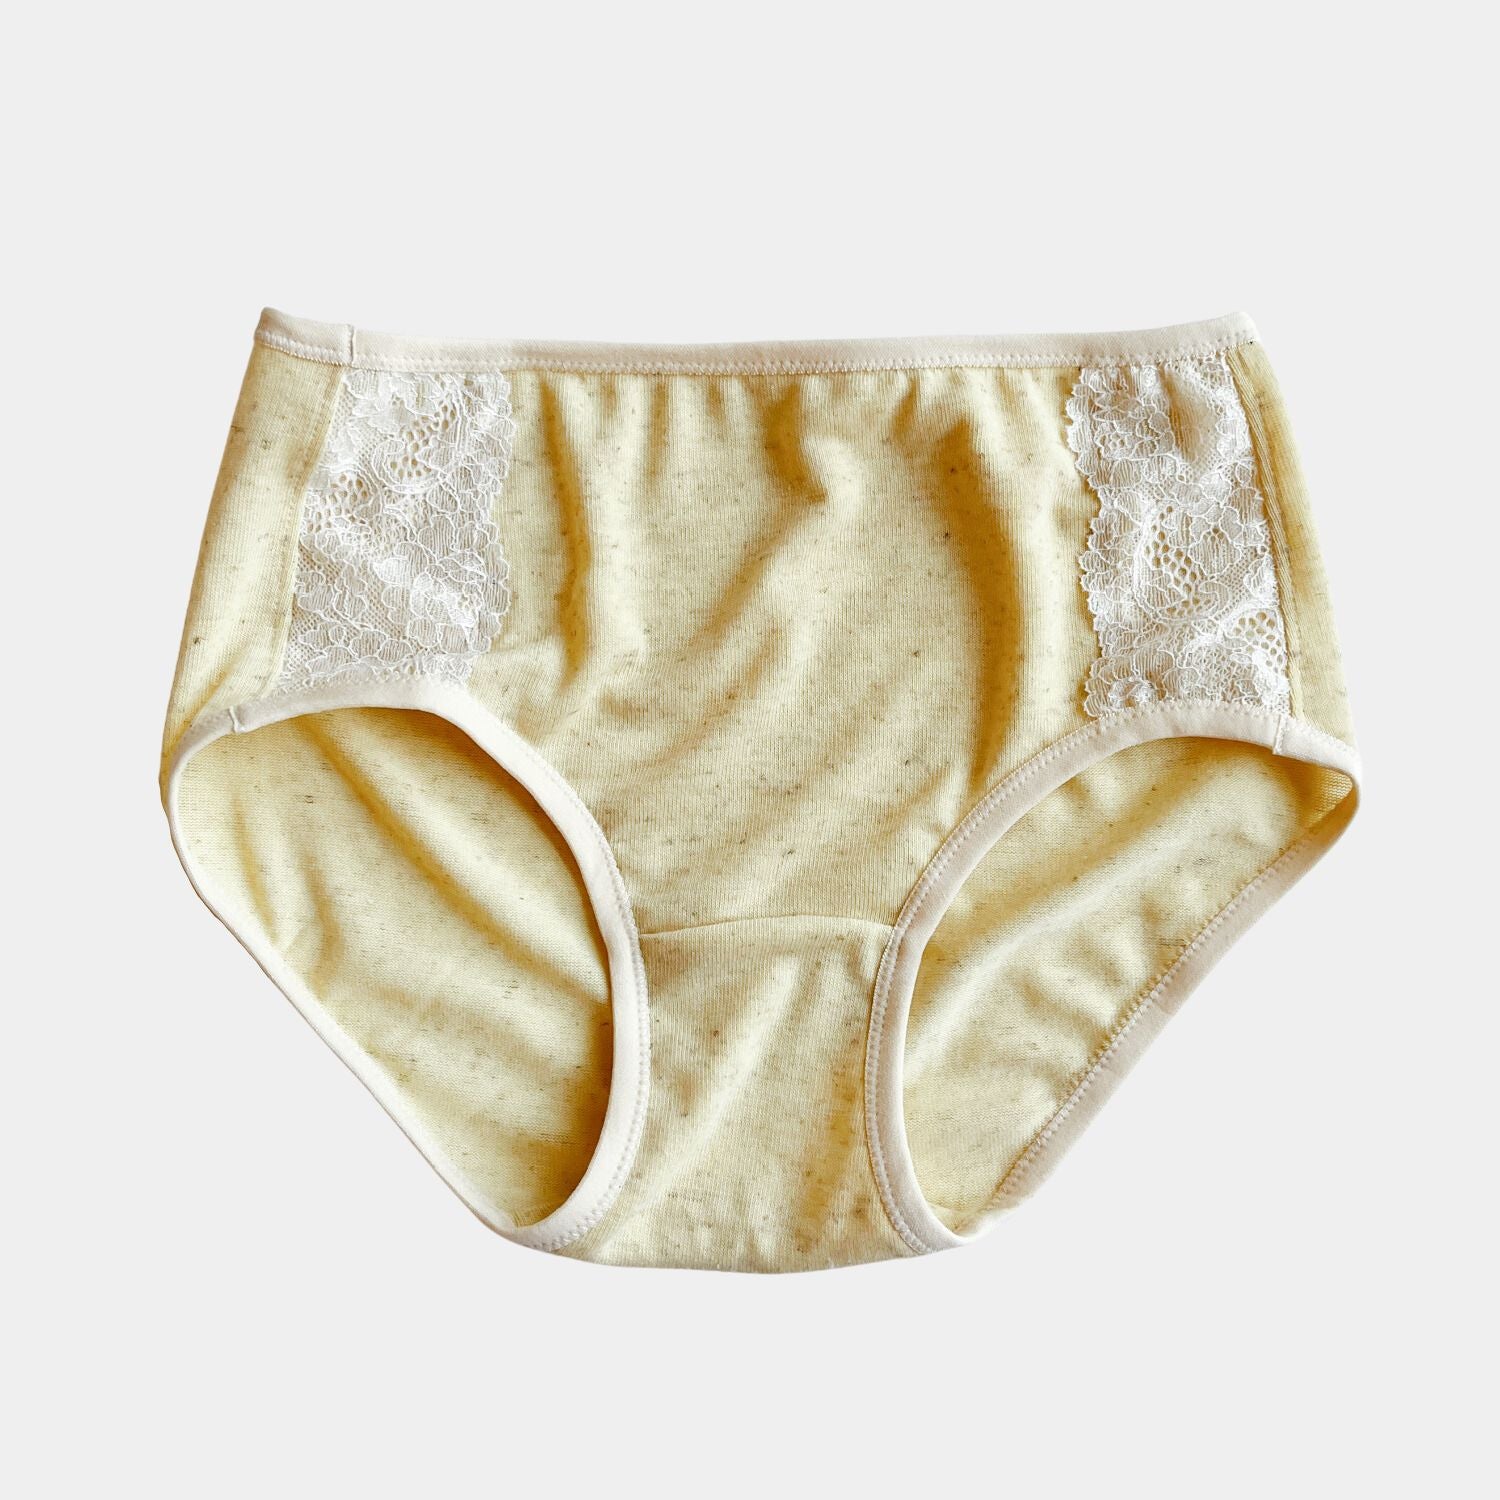 Suxm Ladies Thong Thong Panties Bikini Lightweight No Show Underwear Bag (2  Pieces - Yellow, Black)